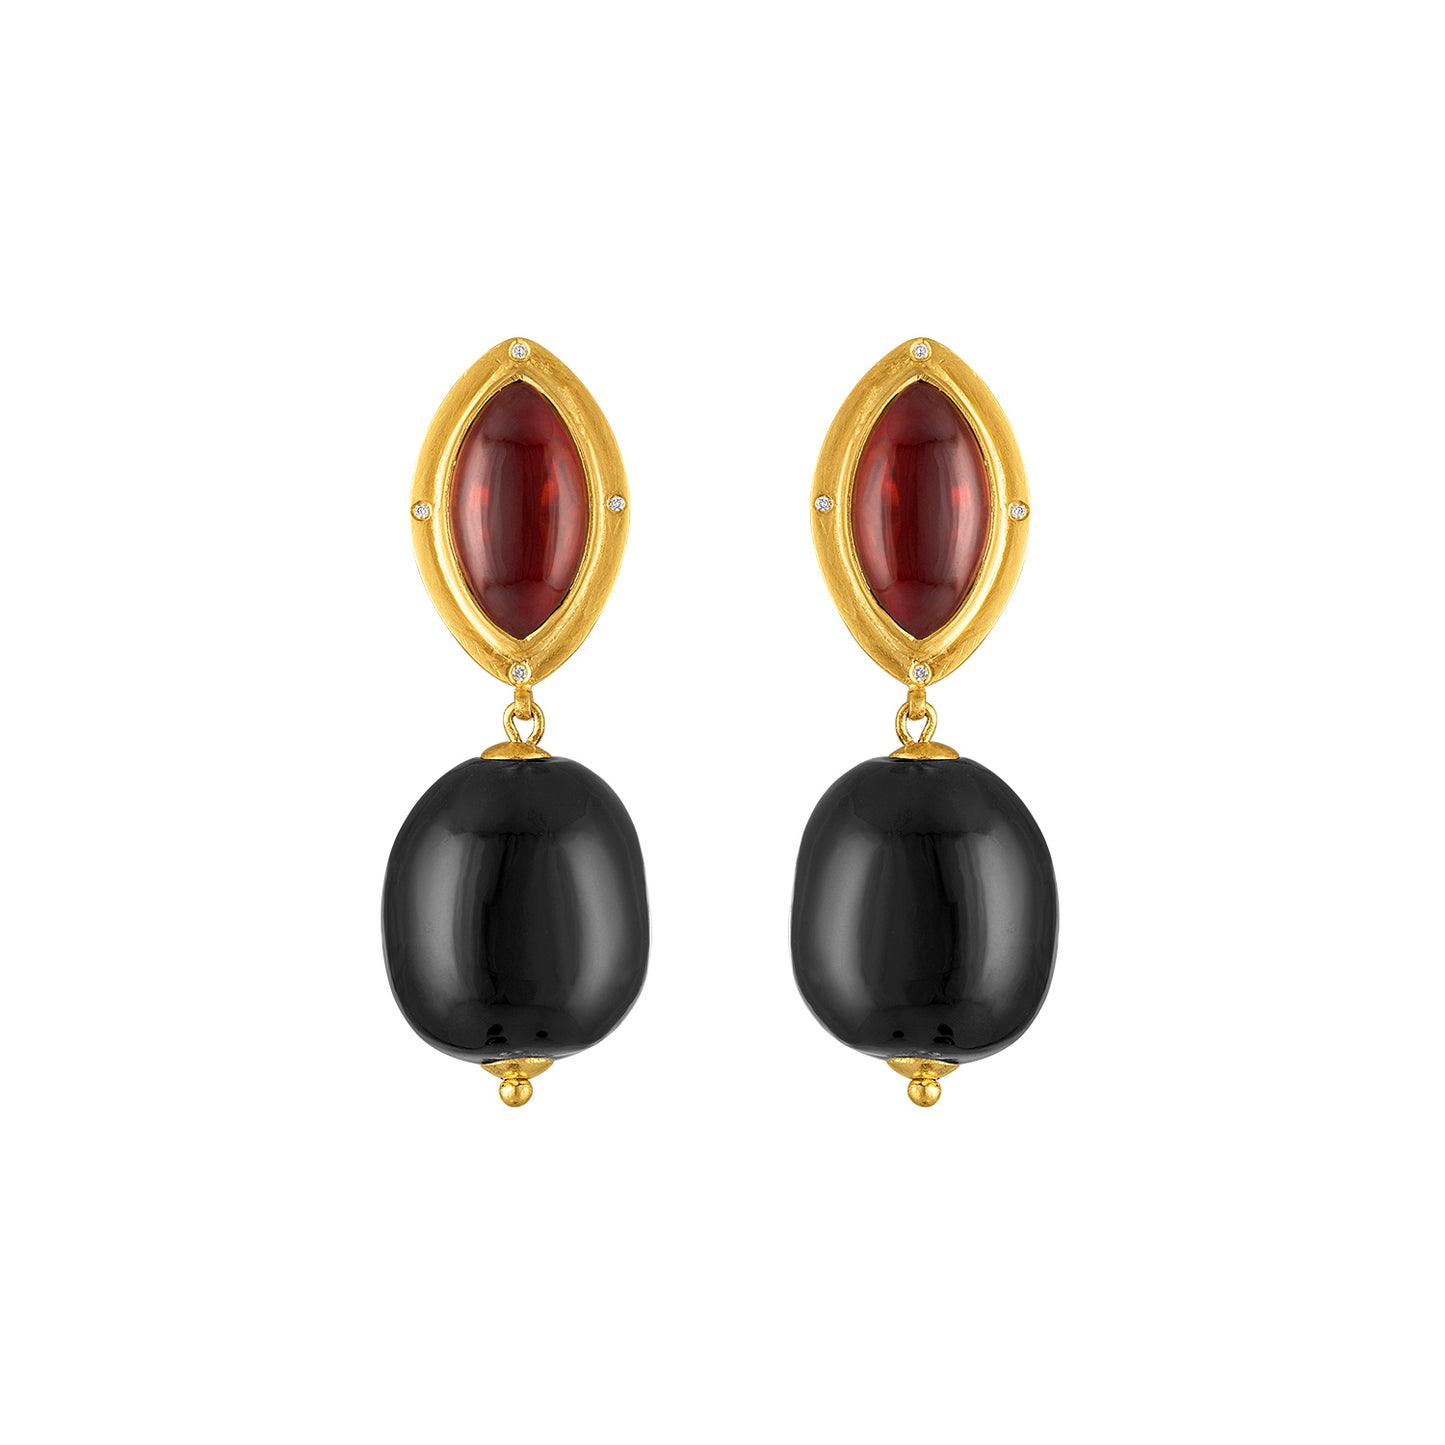 Double Seed Earrings in Garnet, Black Onyx, and Diamond